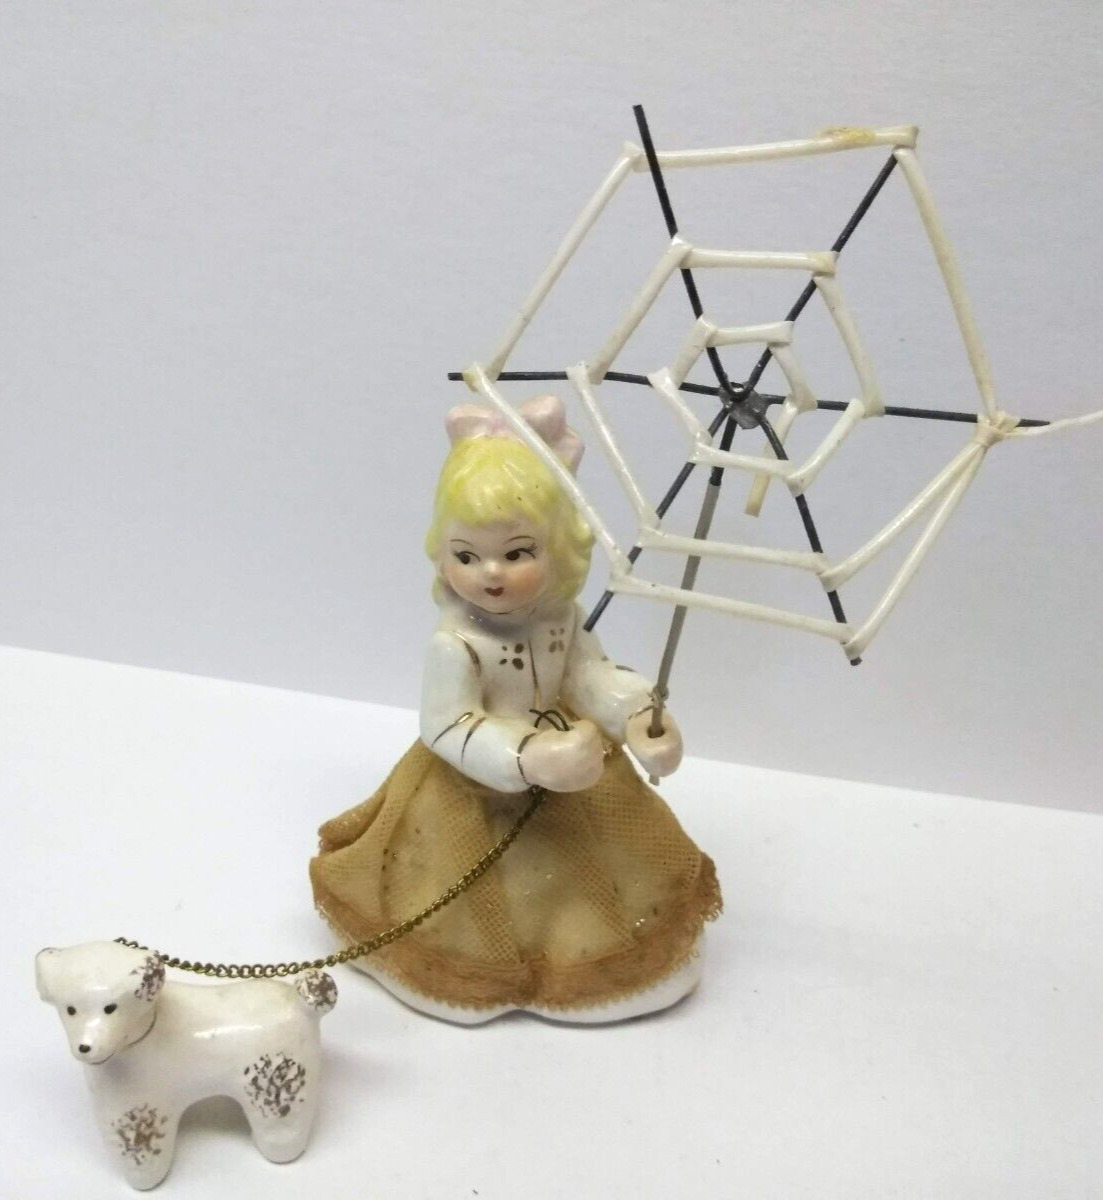 Vintage Walgreens Blonde Lady Figurine w/ Small Dog on Chain w/ Umbrella Frame